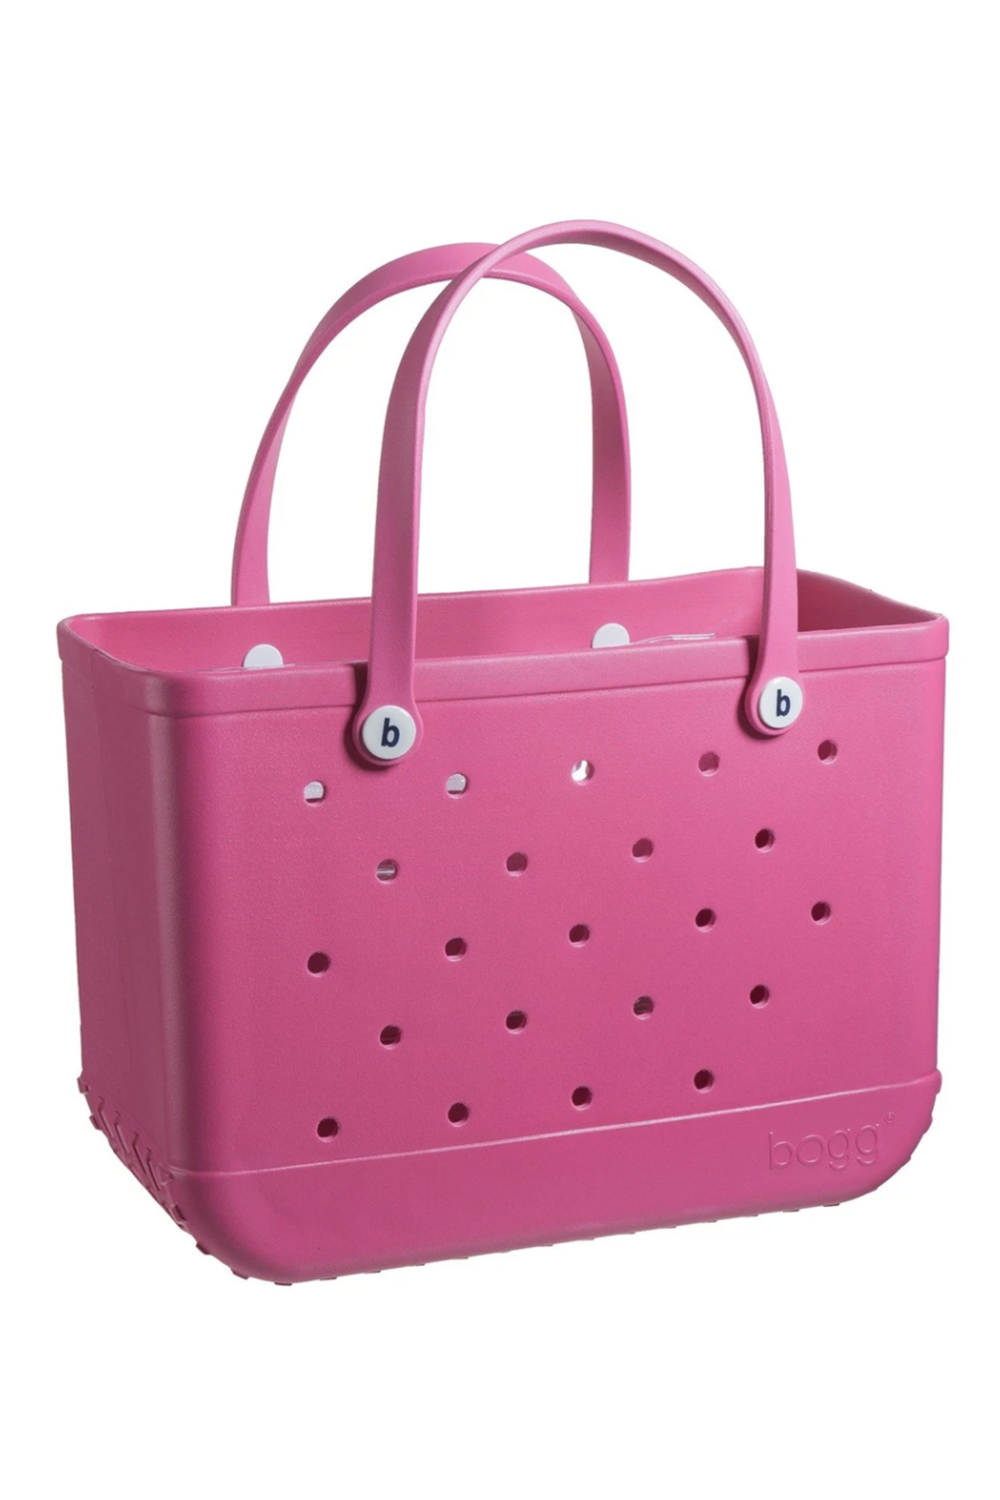 Bogg Bag - Haute Pink